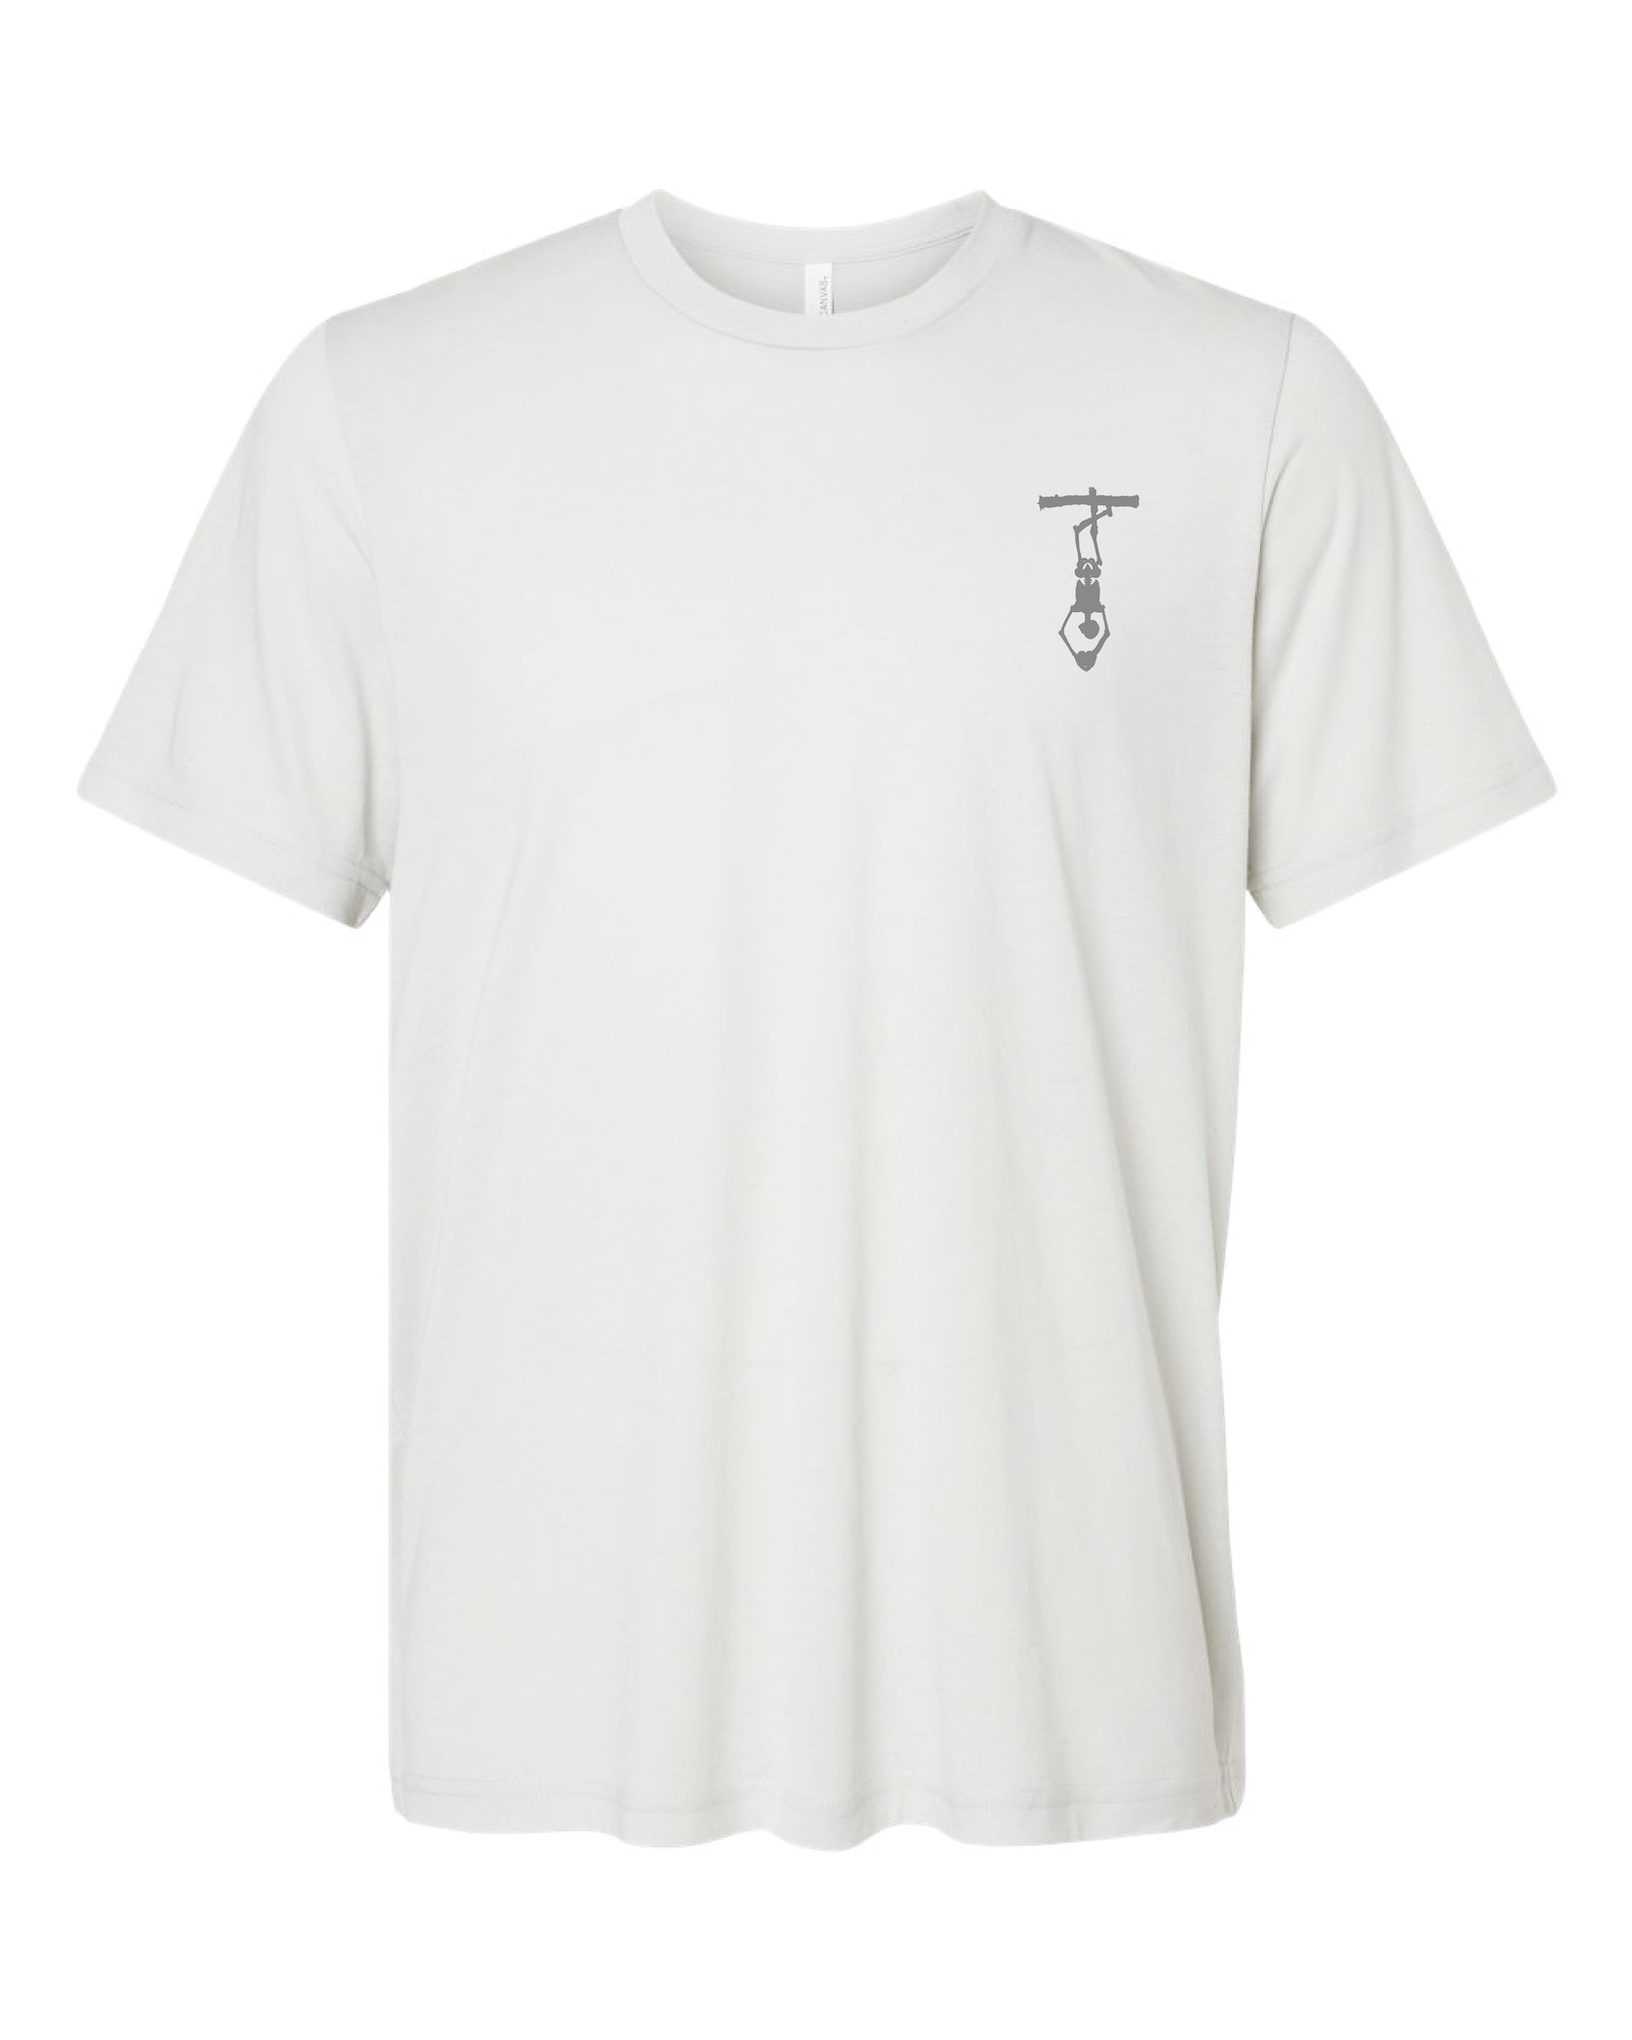 SEG Hanged T-shirt - Grey Print